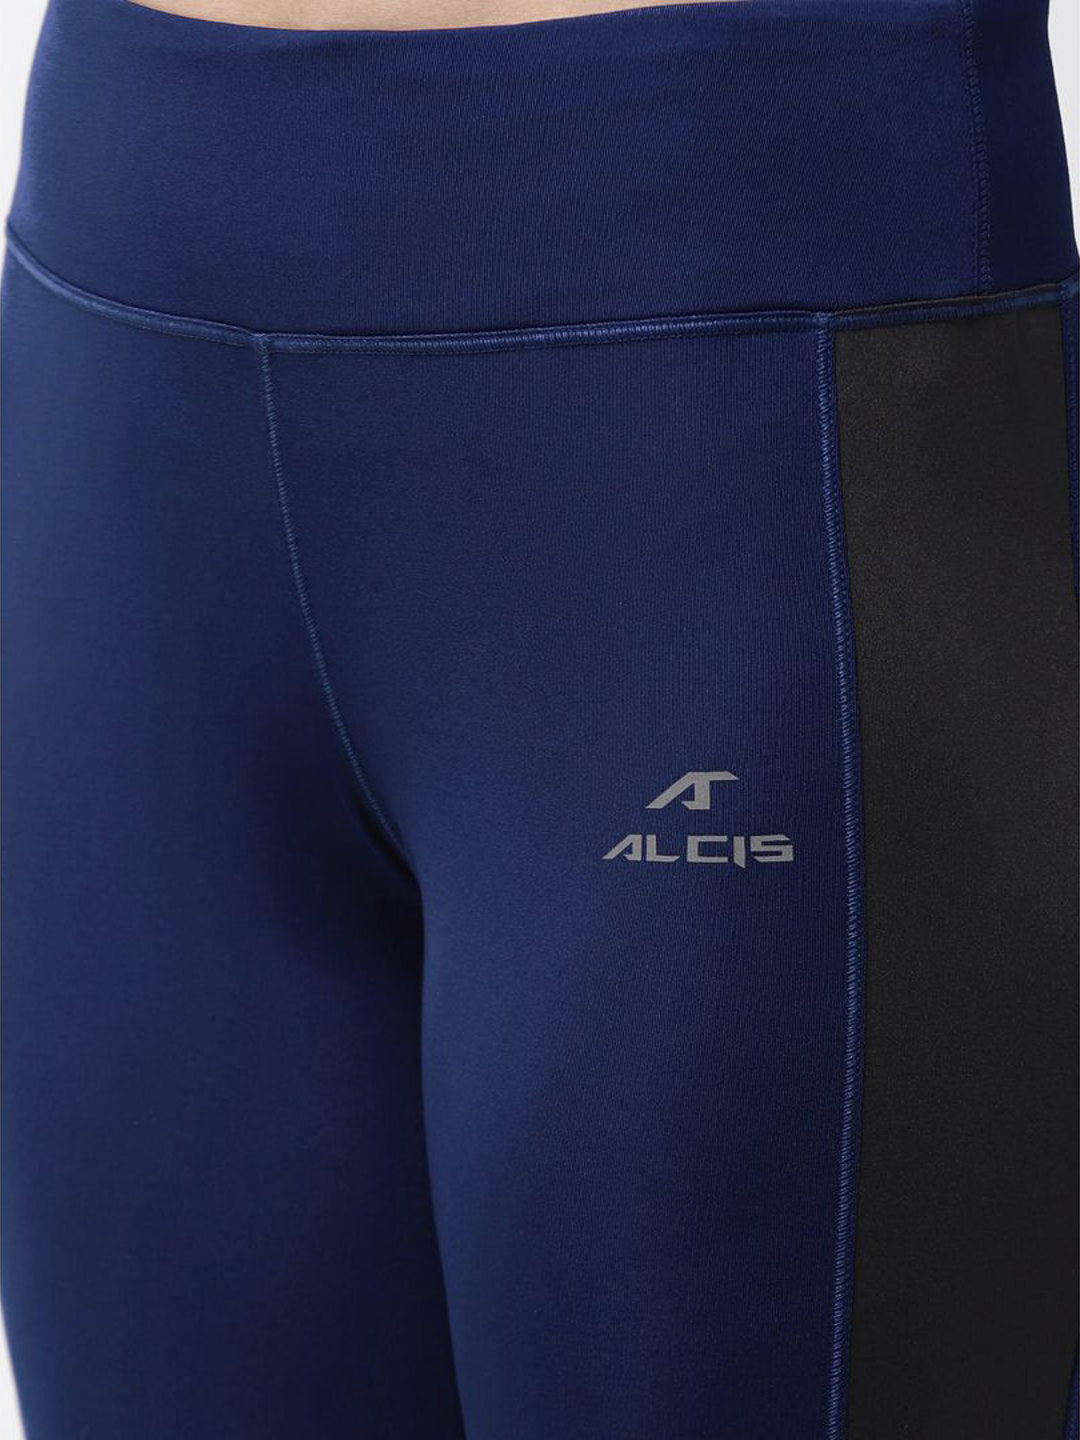 Alcis Women Blue  Black Solid Tights